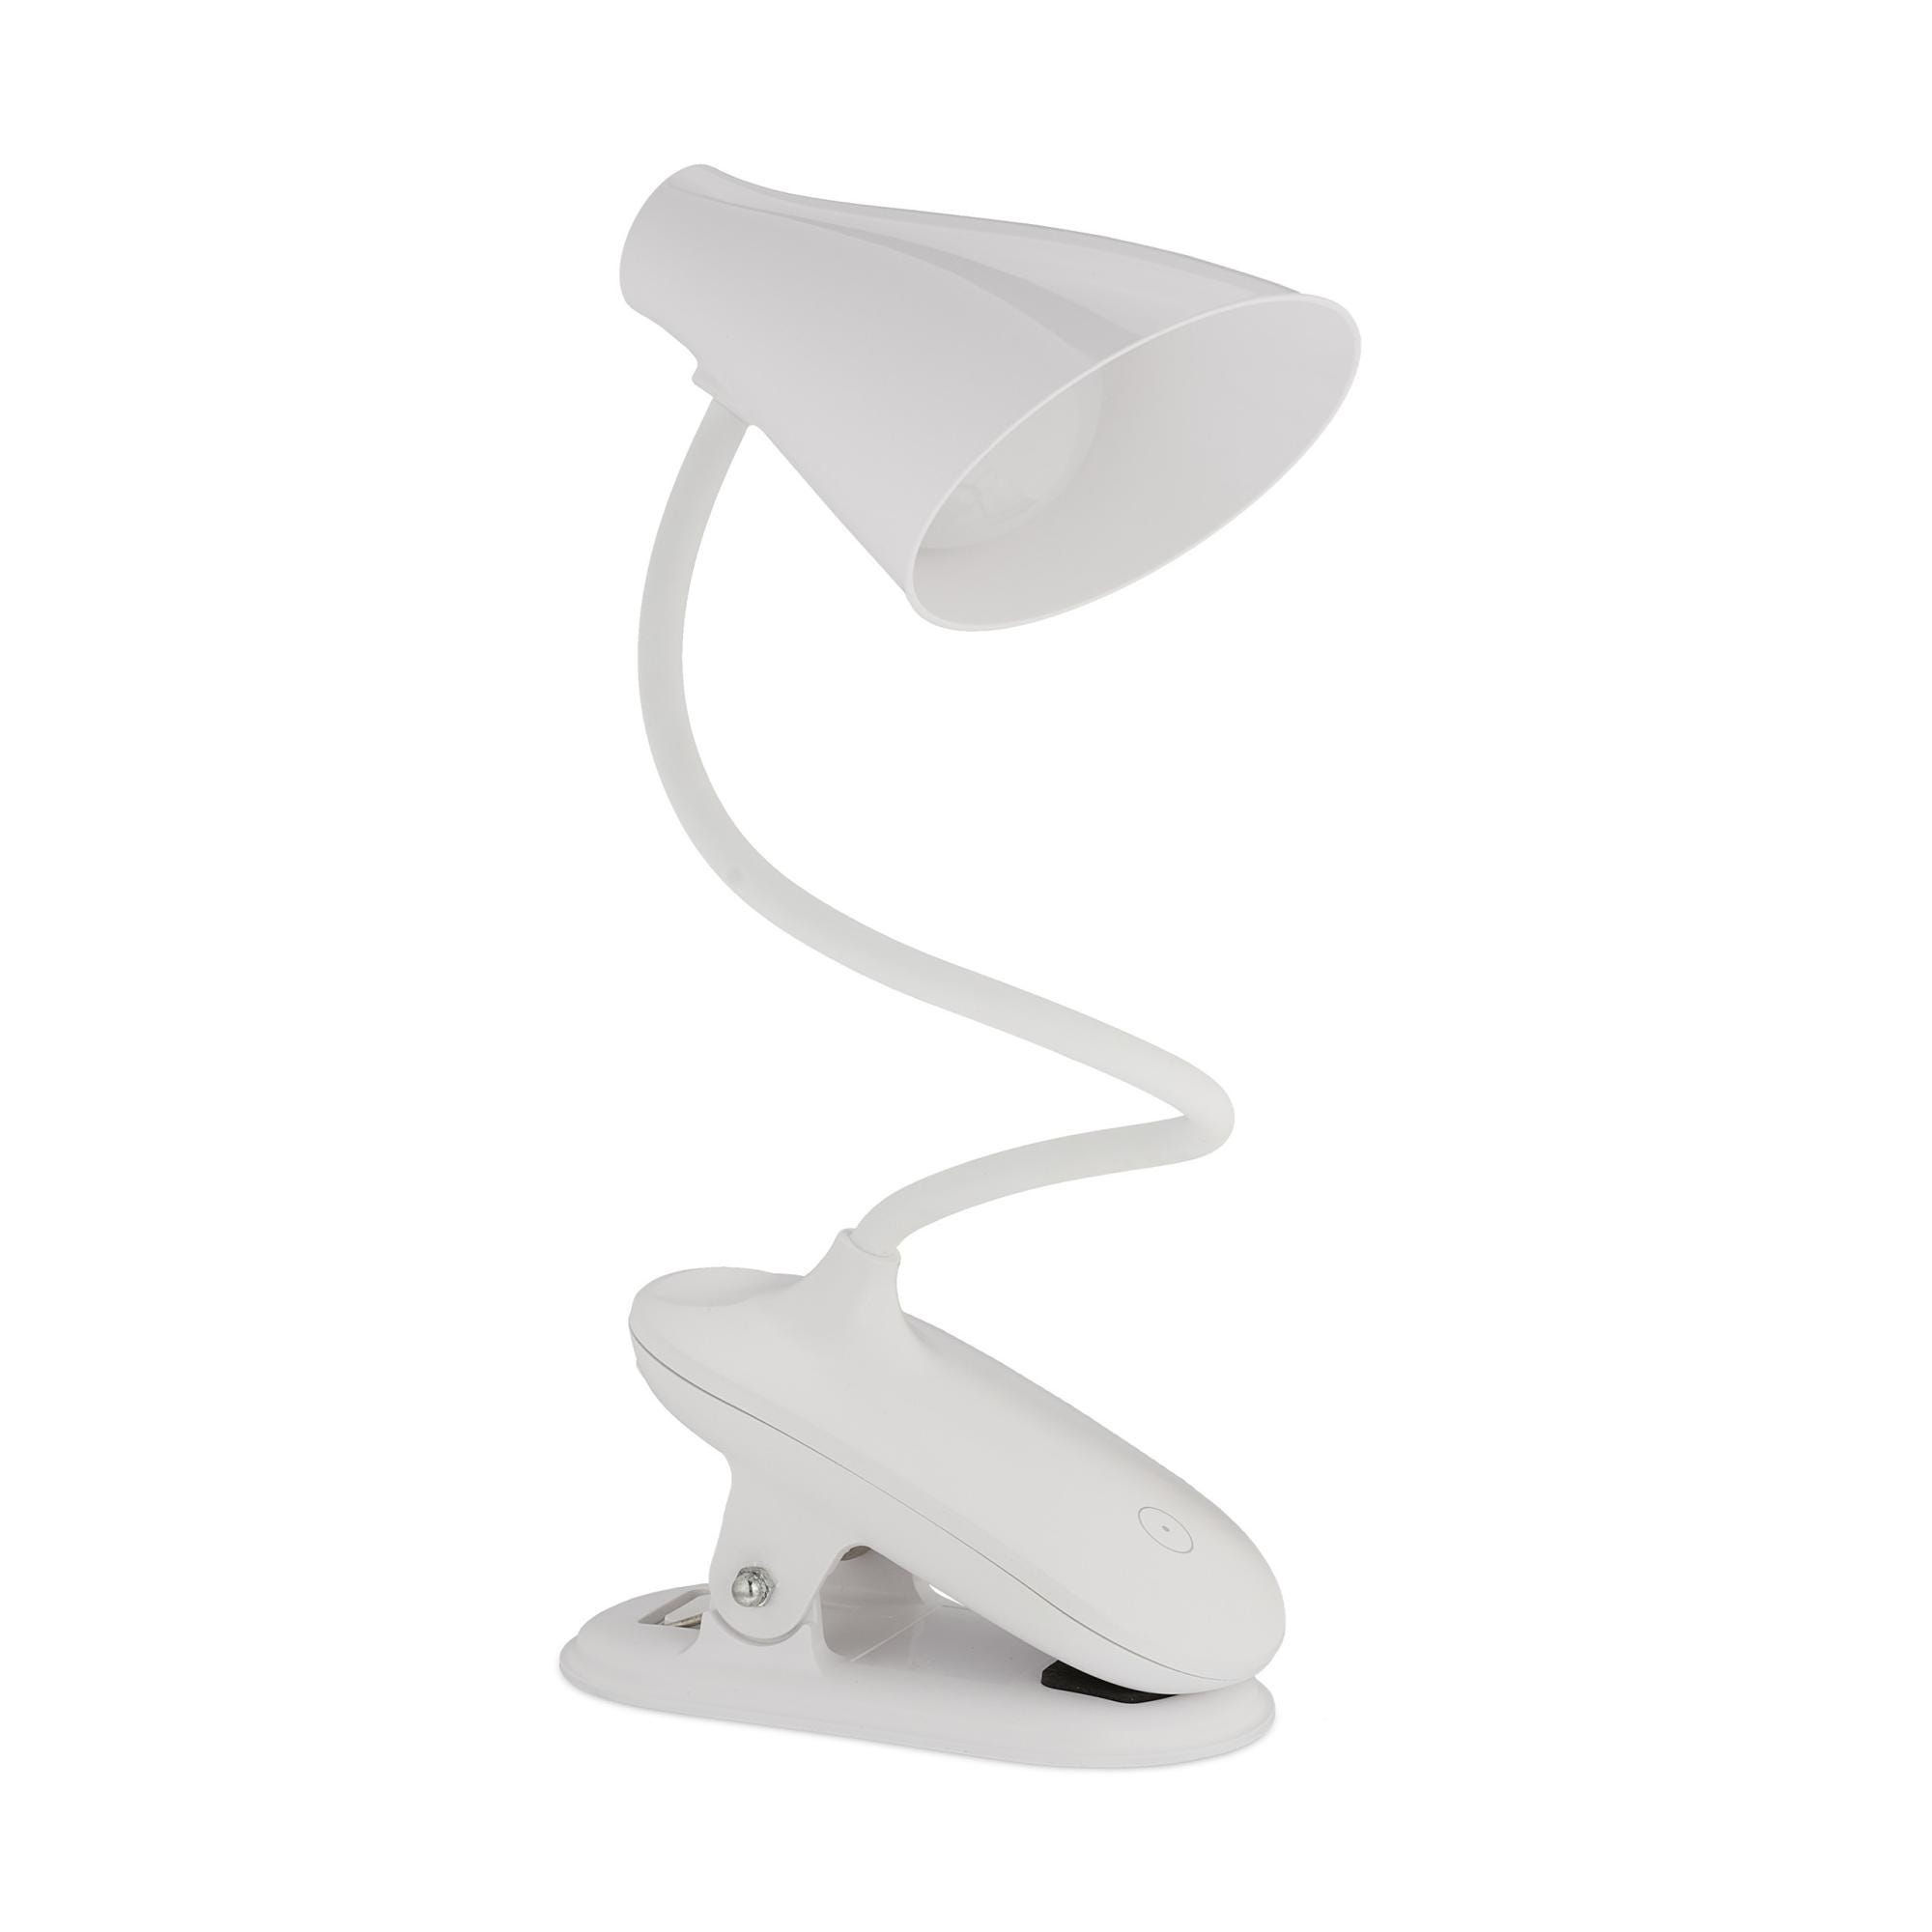 Relaxdays Lampe LED inclinable, luminaire bureau, tactile